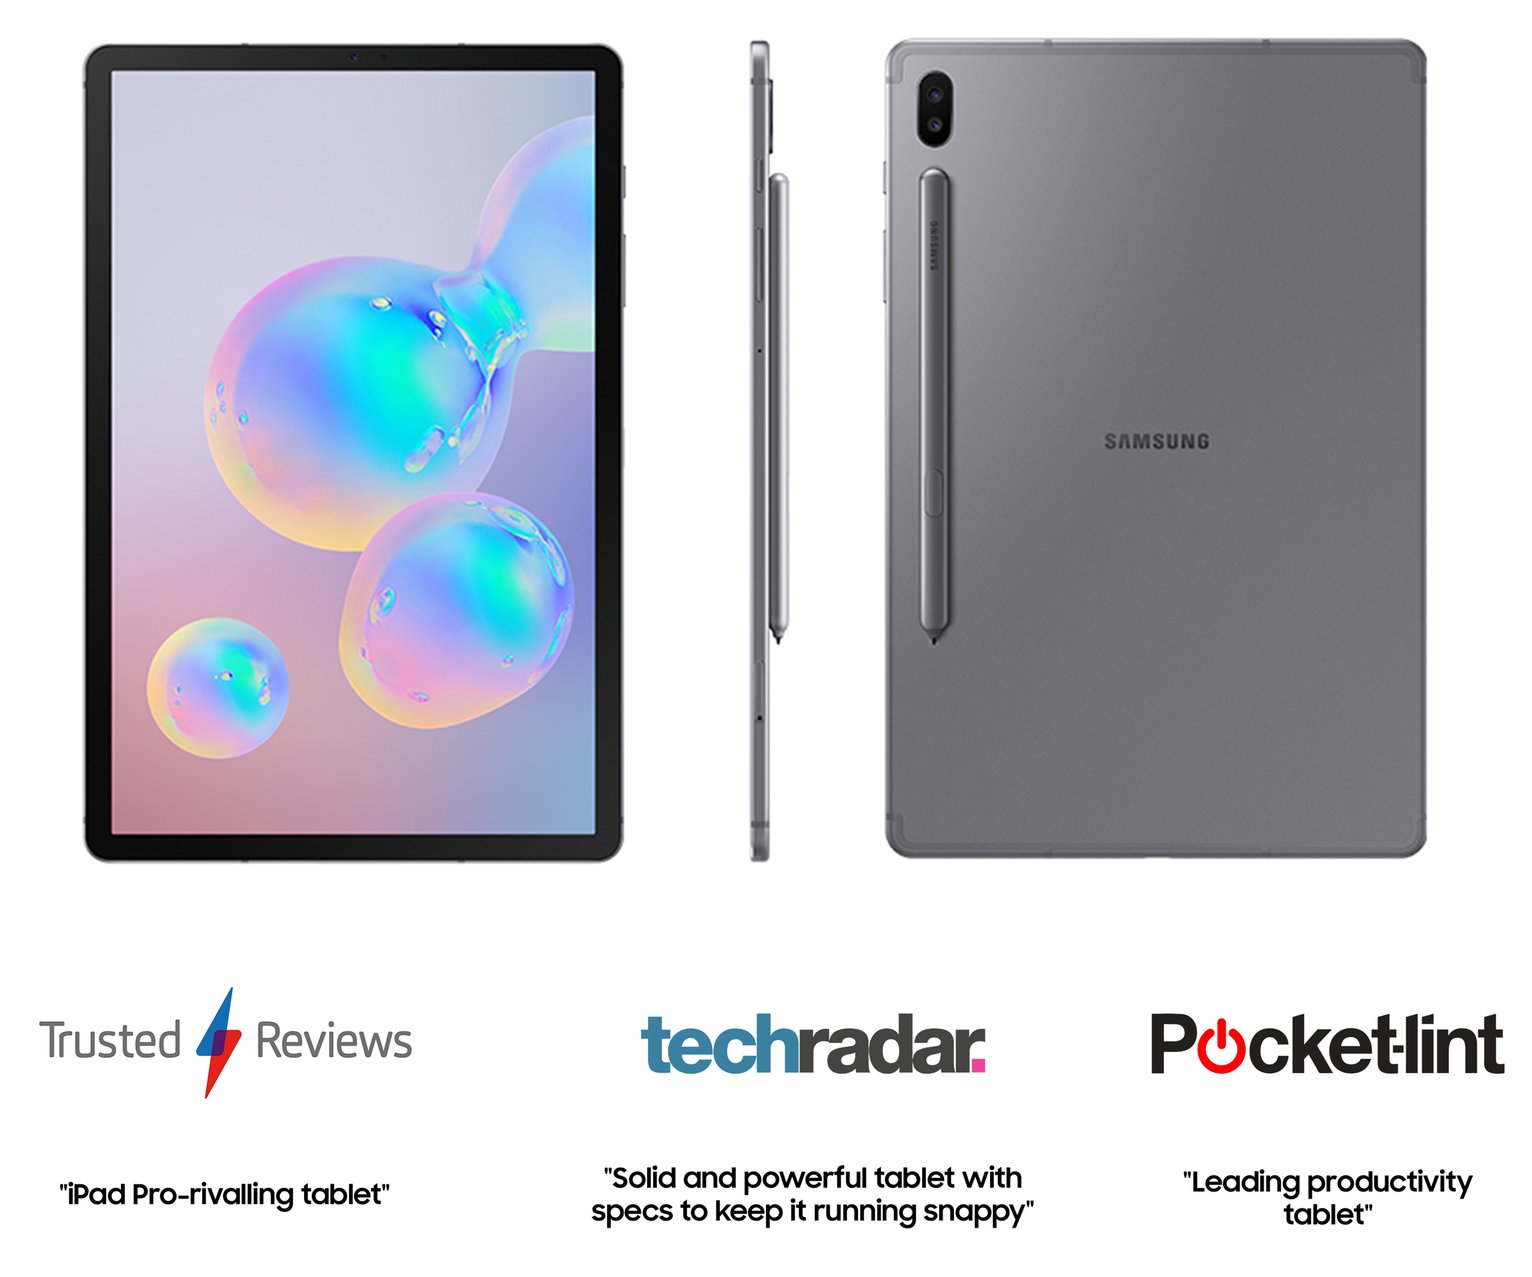 Samsung Galaxy Tab S6 10.5 inch 128GB Wi-Fi Tablet Review